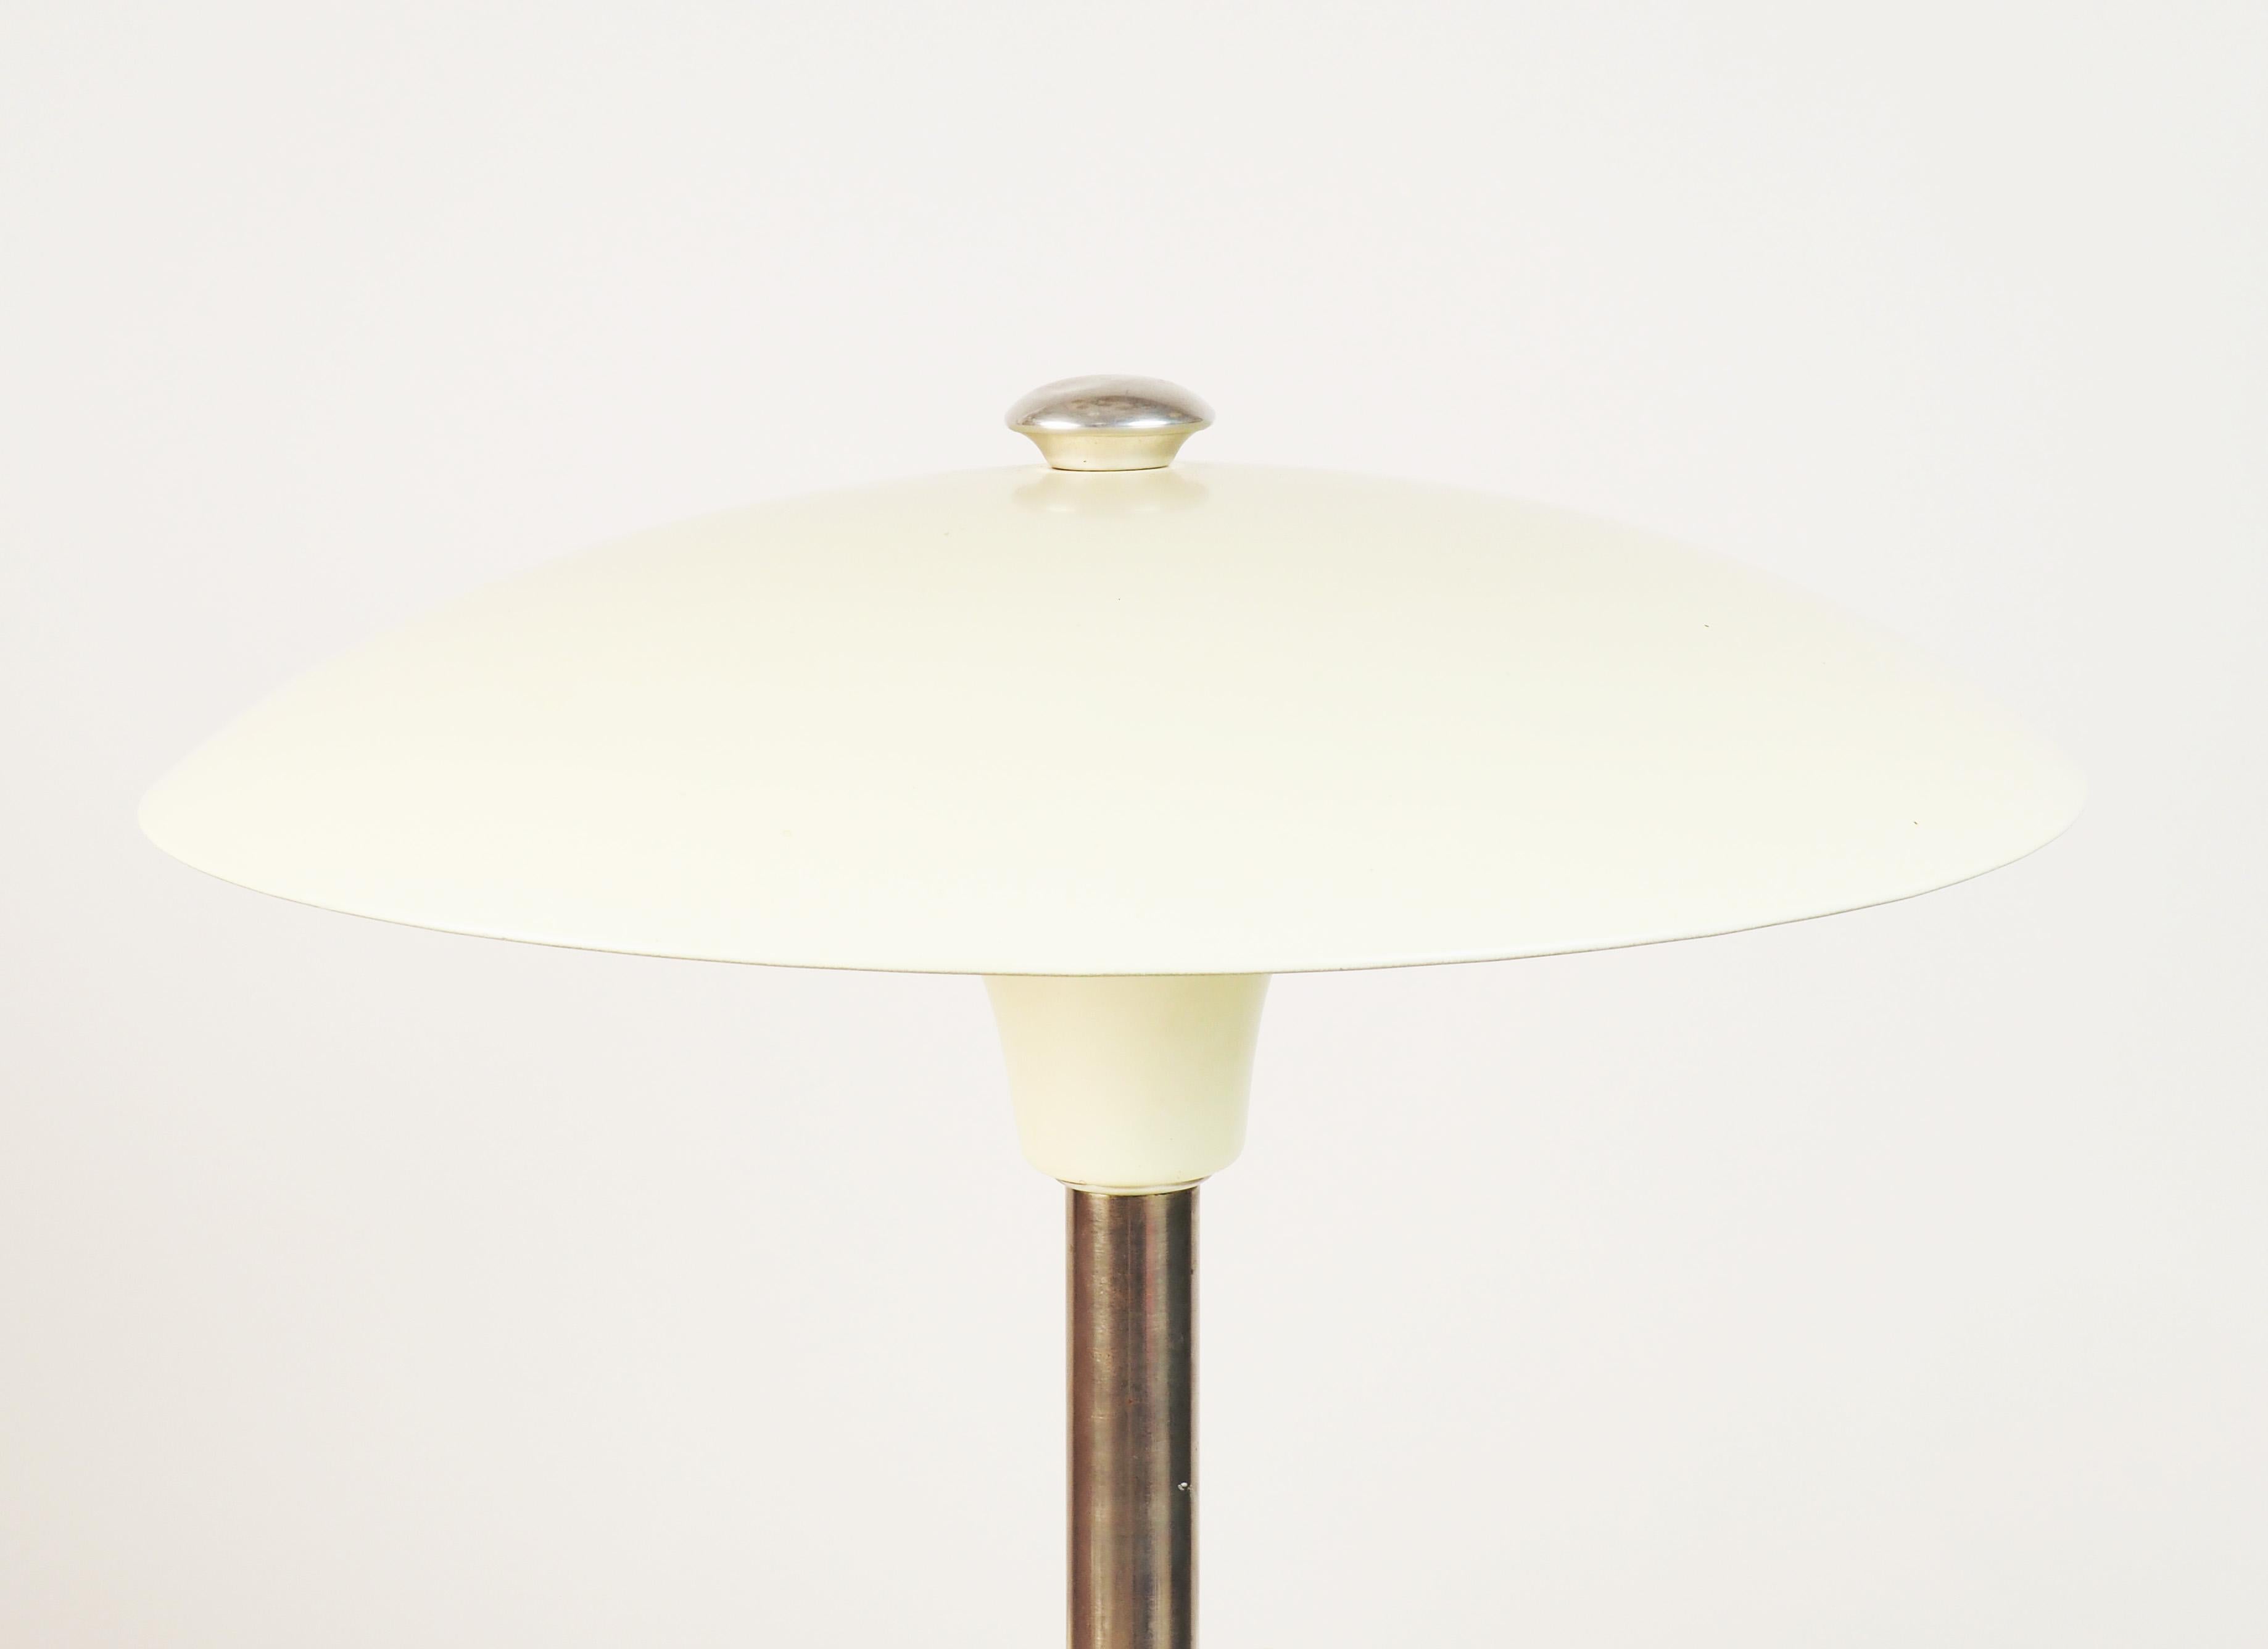 German Bauhaus Table Lamp Designed by Max Schumacher